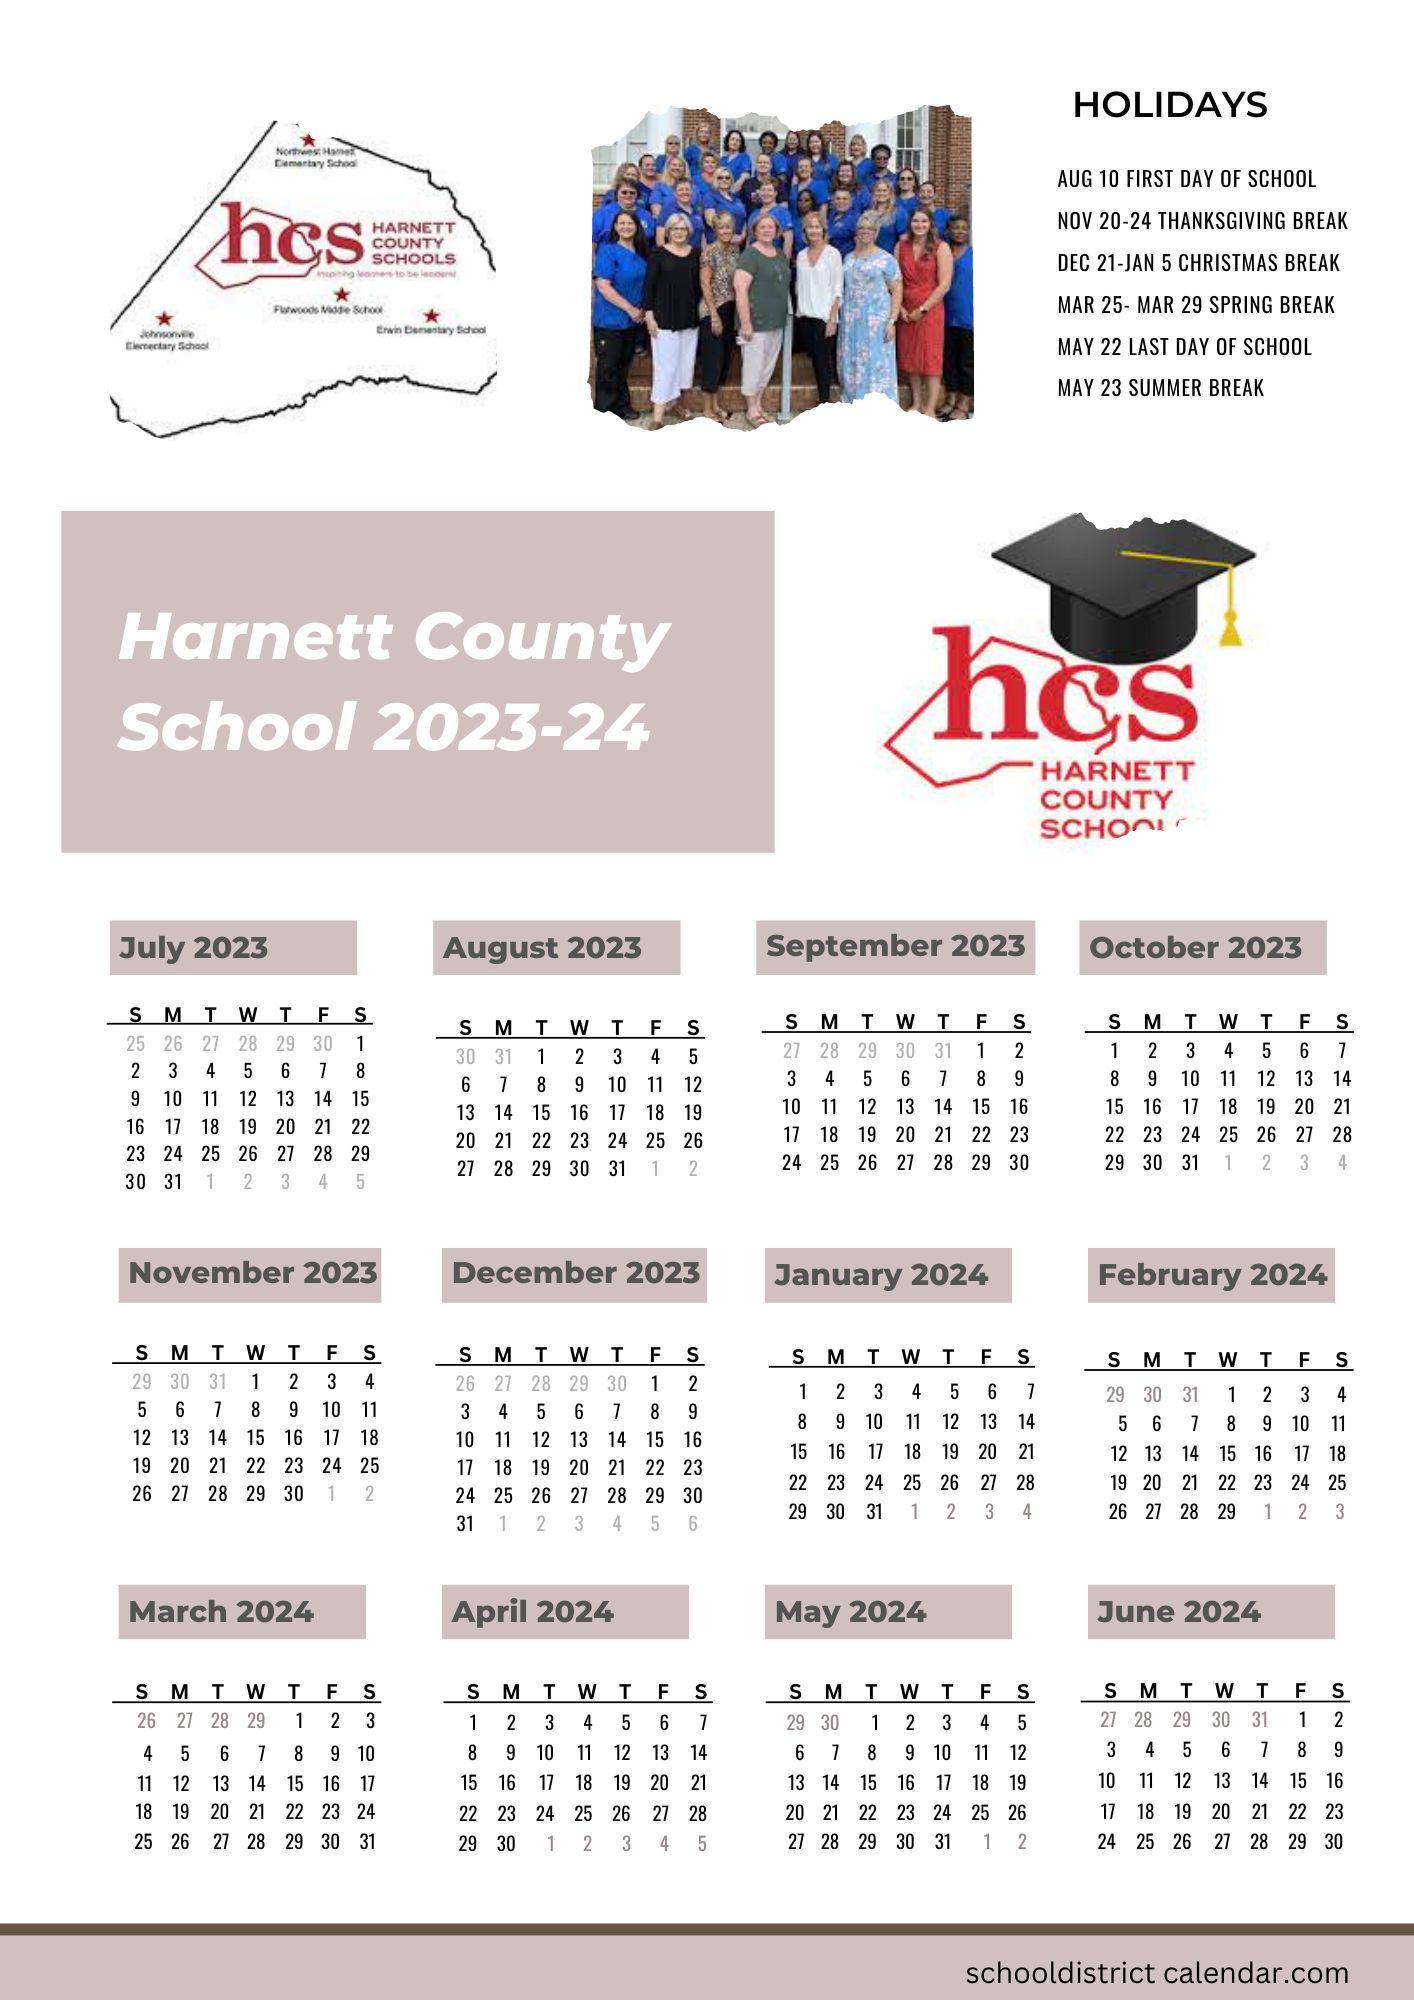 Harnett County Schools Calendar Holidays 2023-2024